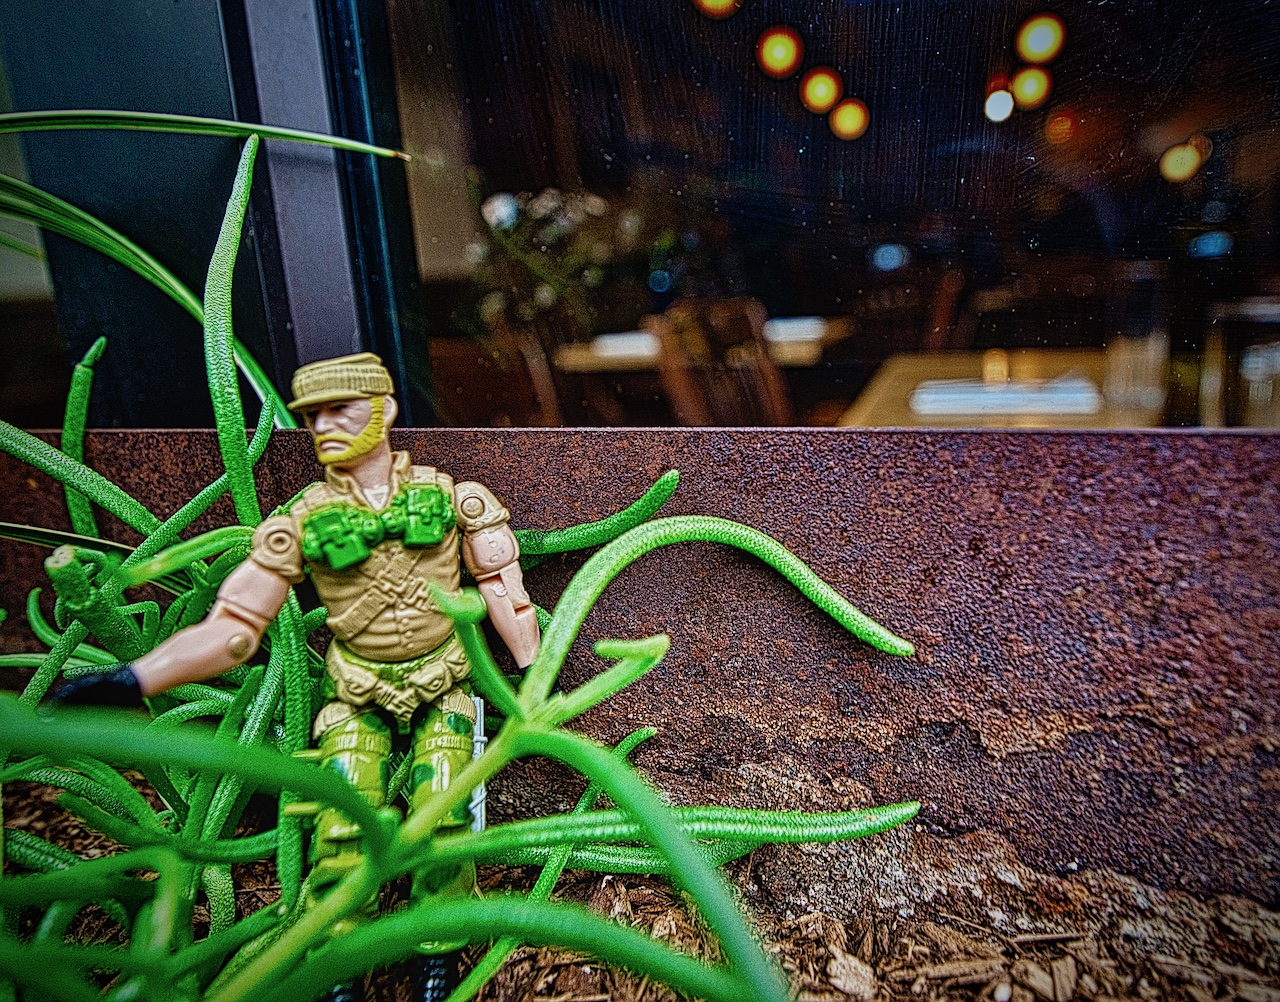 G.I. Joe is in the window box on patrol. Photo by Patrick Robinson